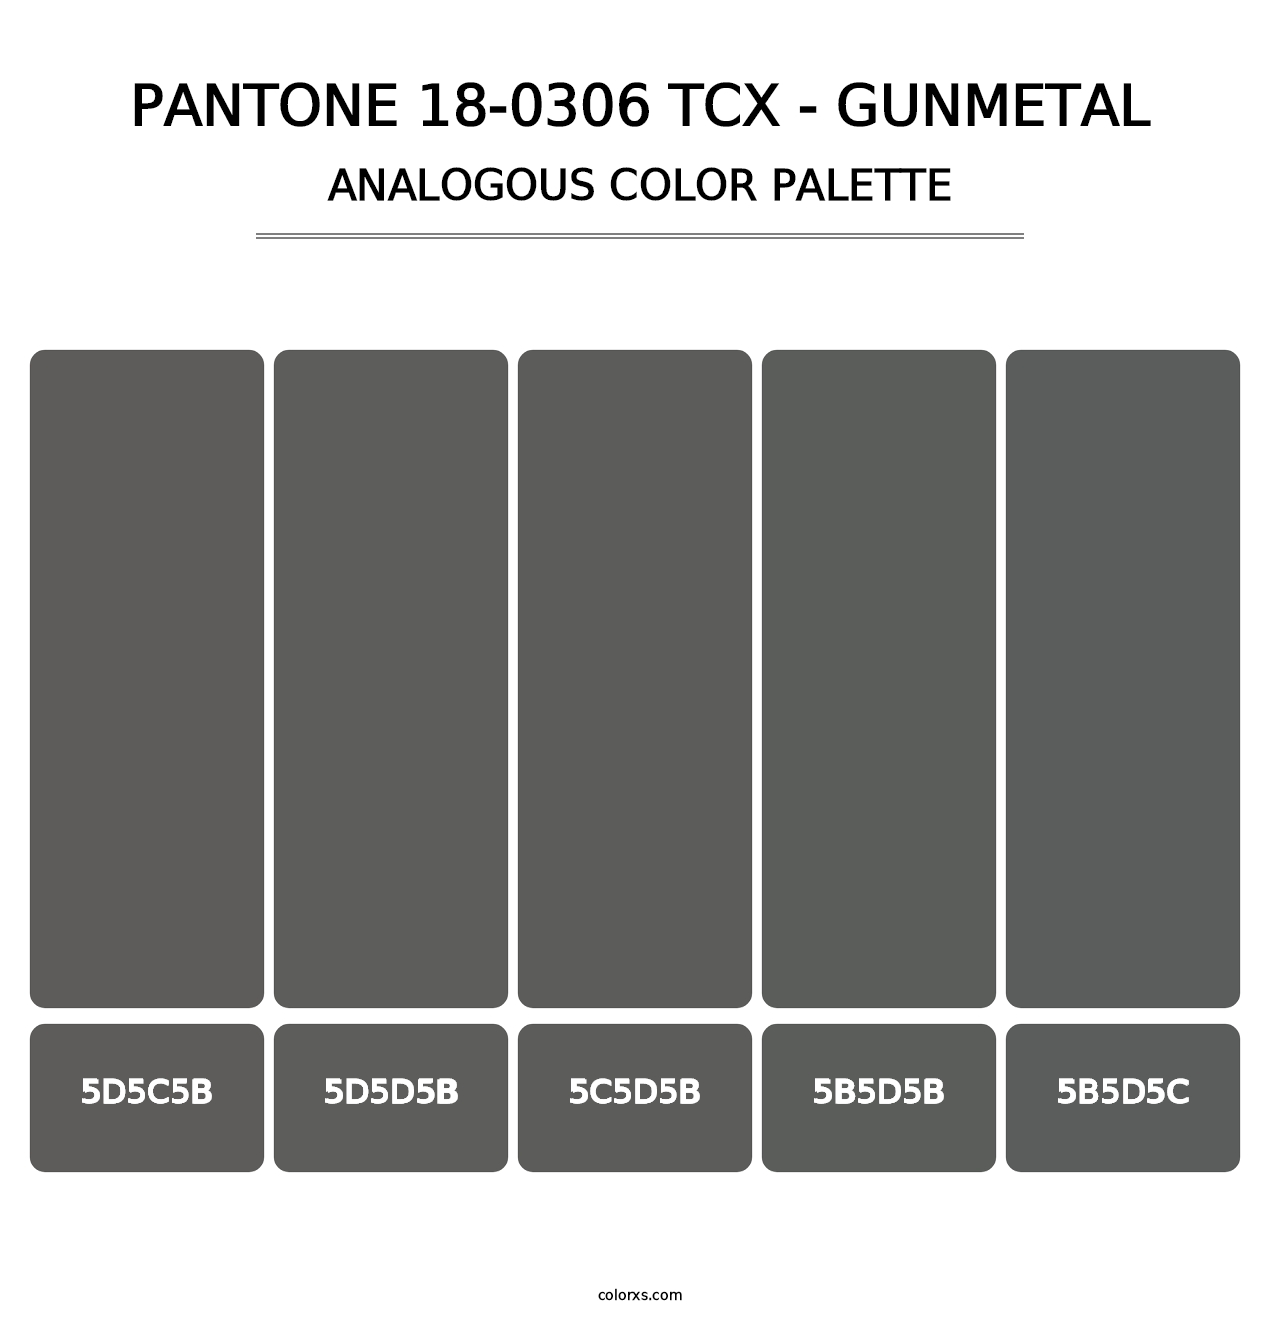 PANTONE 18-0306 TCX - Gunmetal - Analogous Color Palette